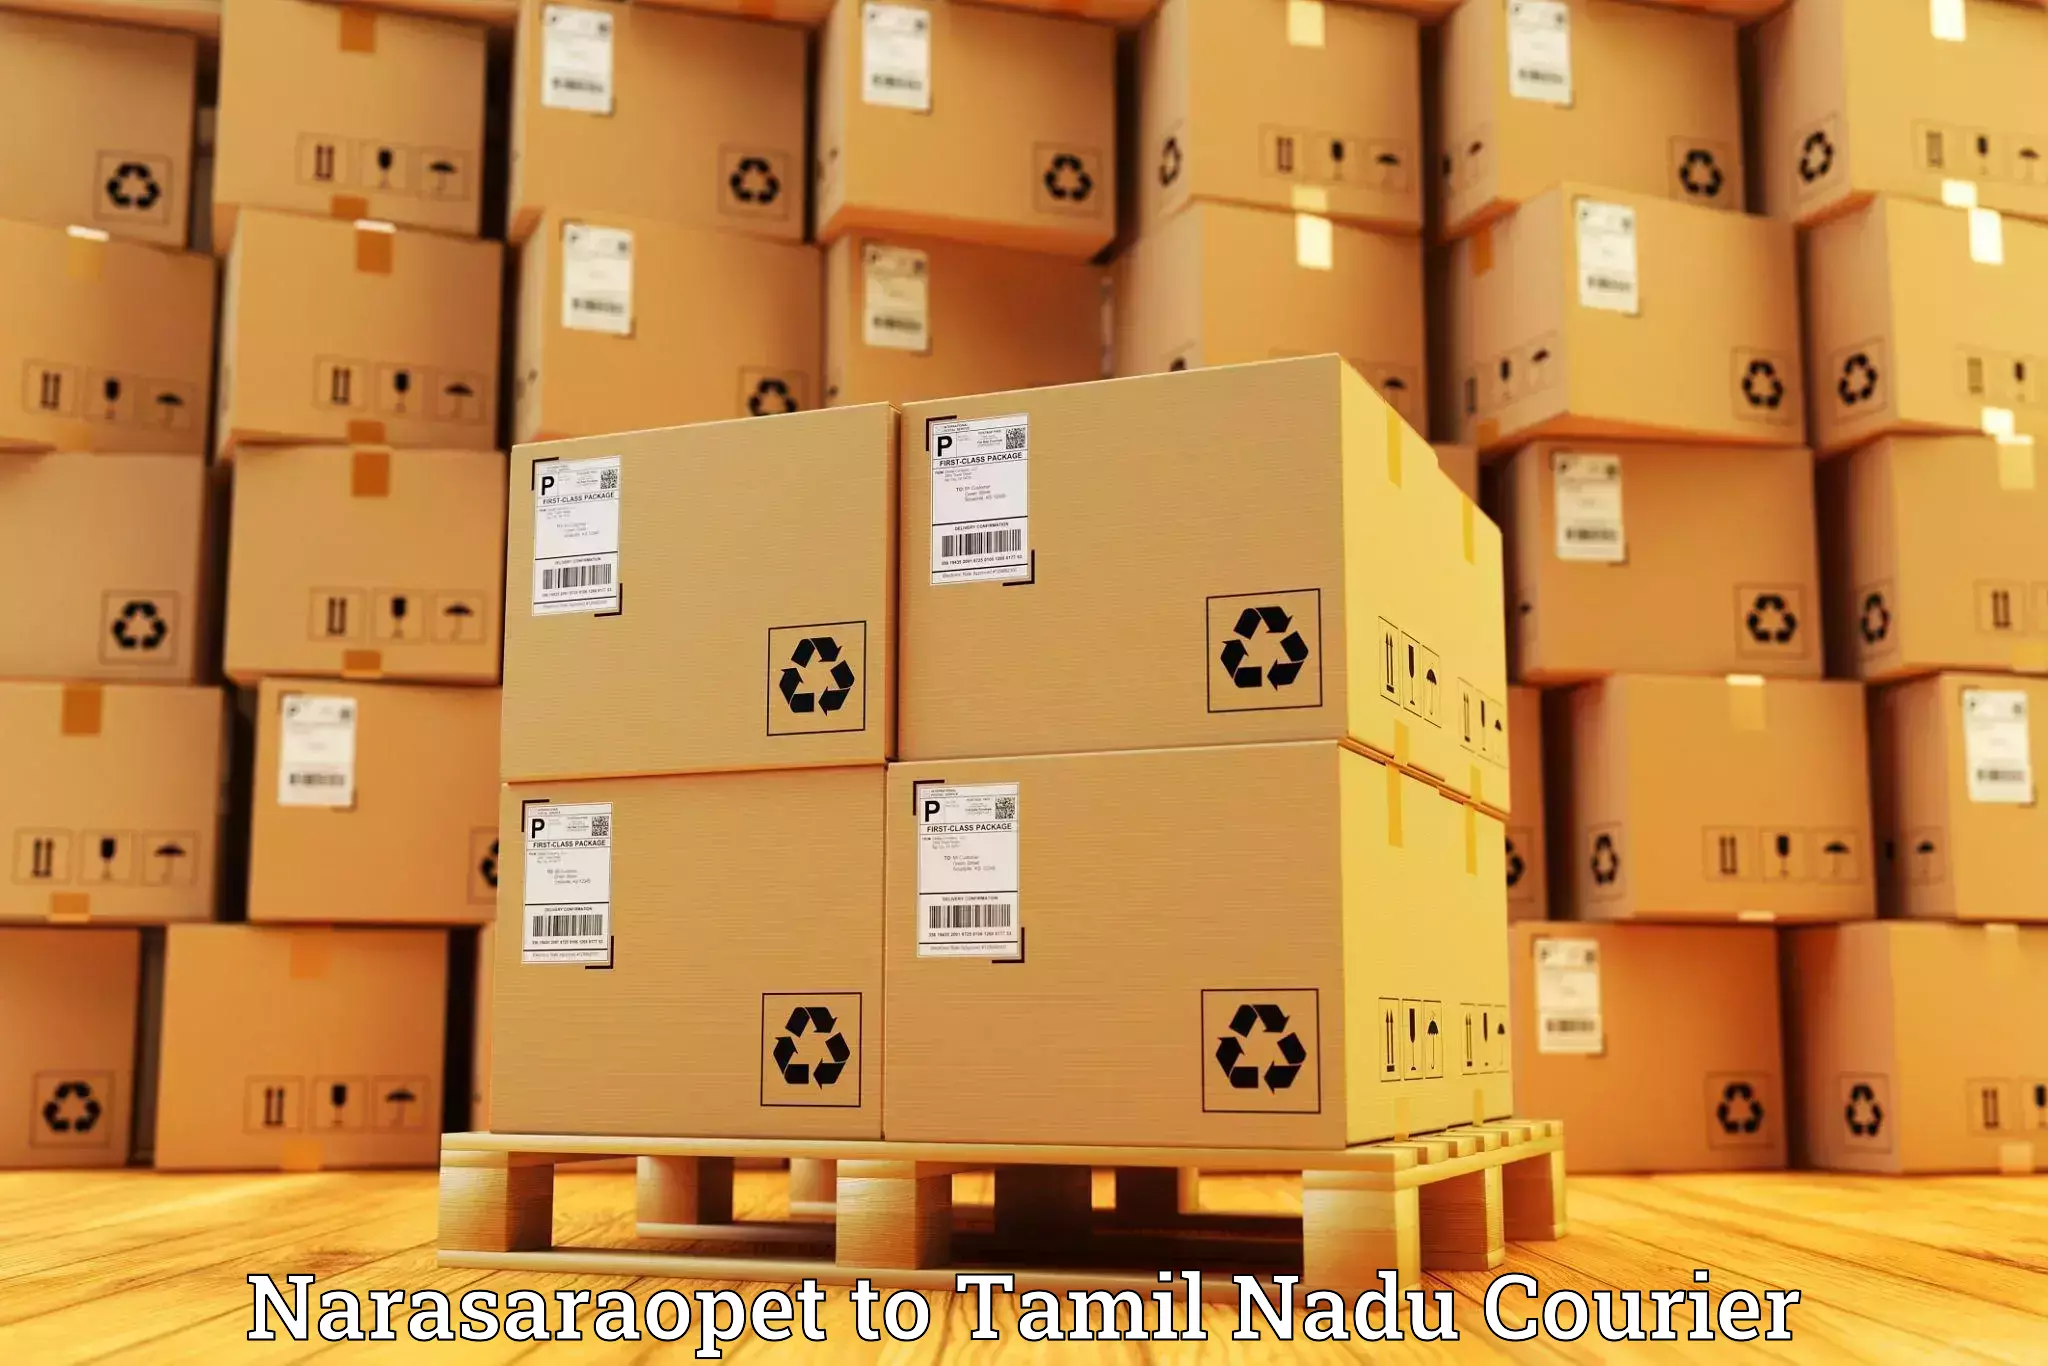 Logistics service provider Narasaraopet to Periyakulam